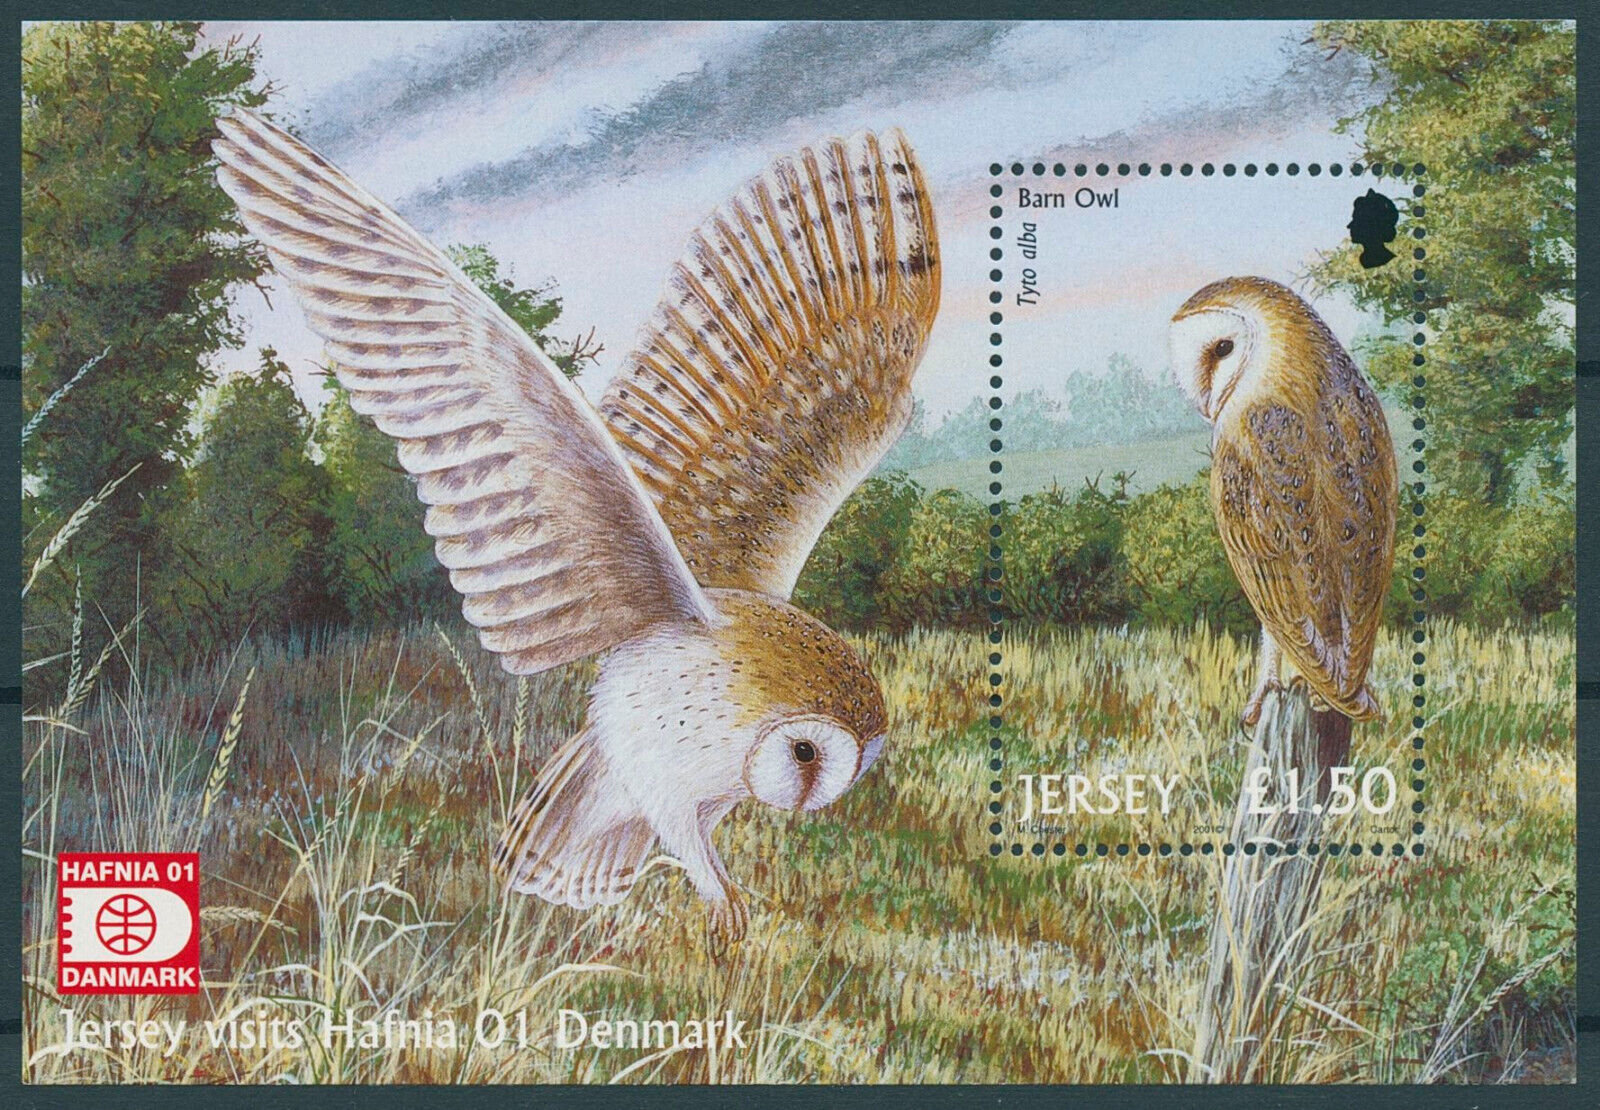 Jersey 2001 MNH Birds of Prey on Stamps Owls Barn Owl Hafnia 01 Denmark 1v M/S